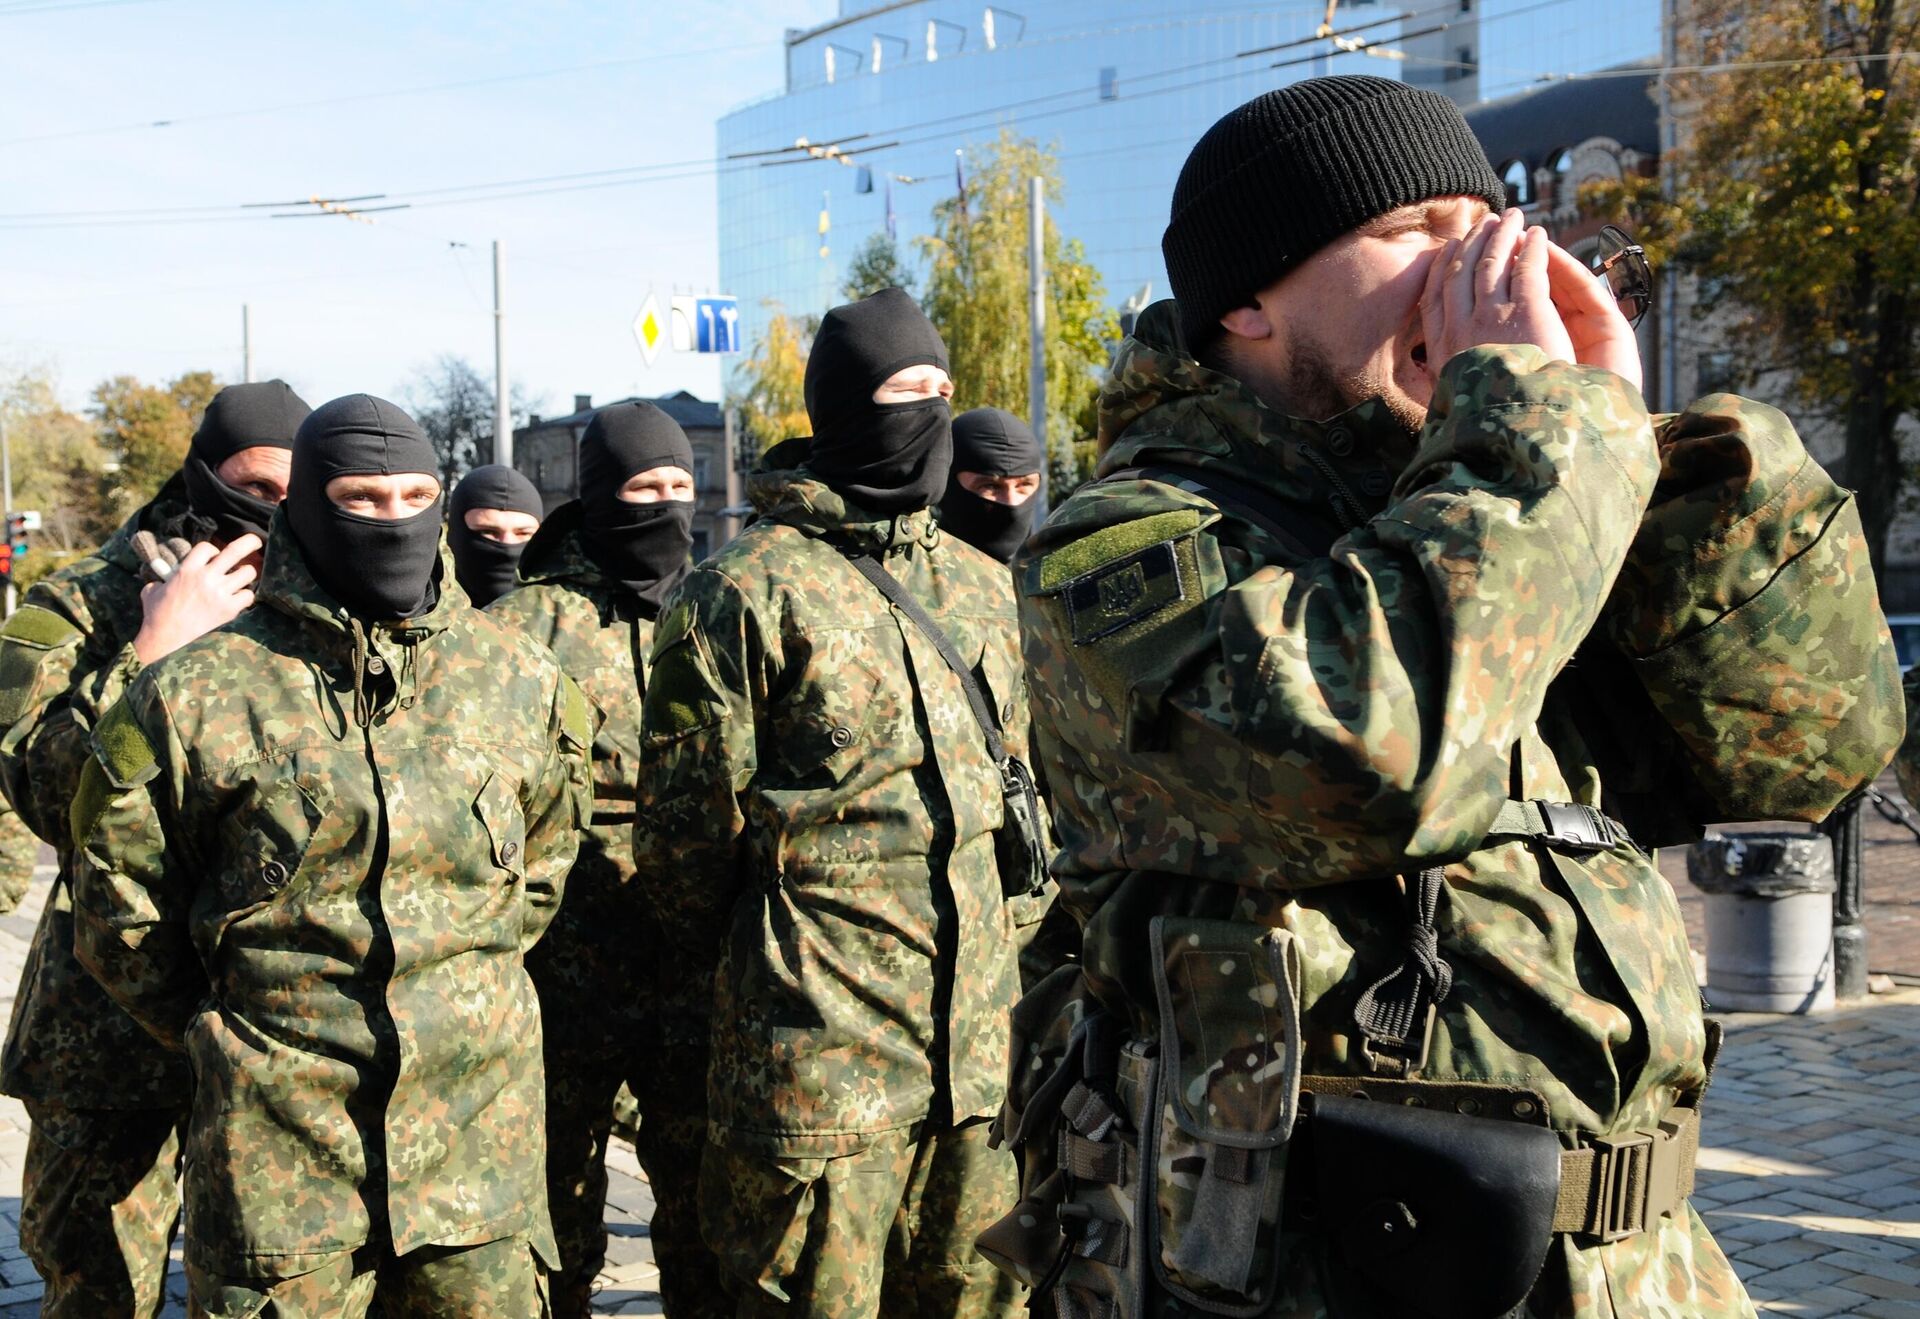 Azov Battalion cadets deployed in the conflict zone in southeastern Ukraine, 2014. - Sputnik International, 1920, 22.05.2022